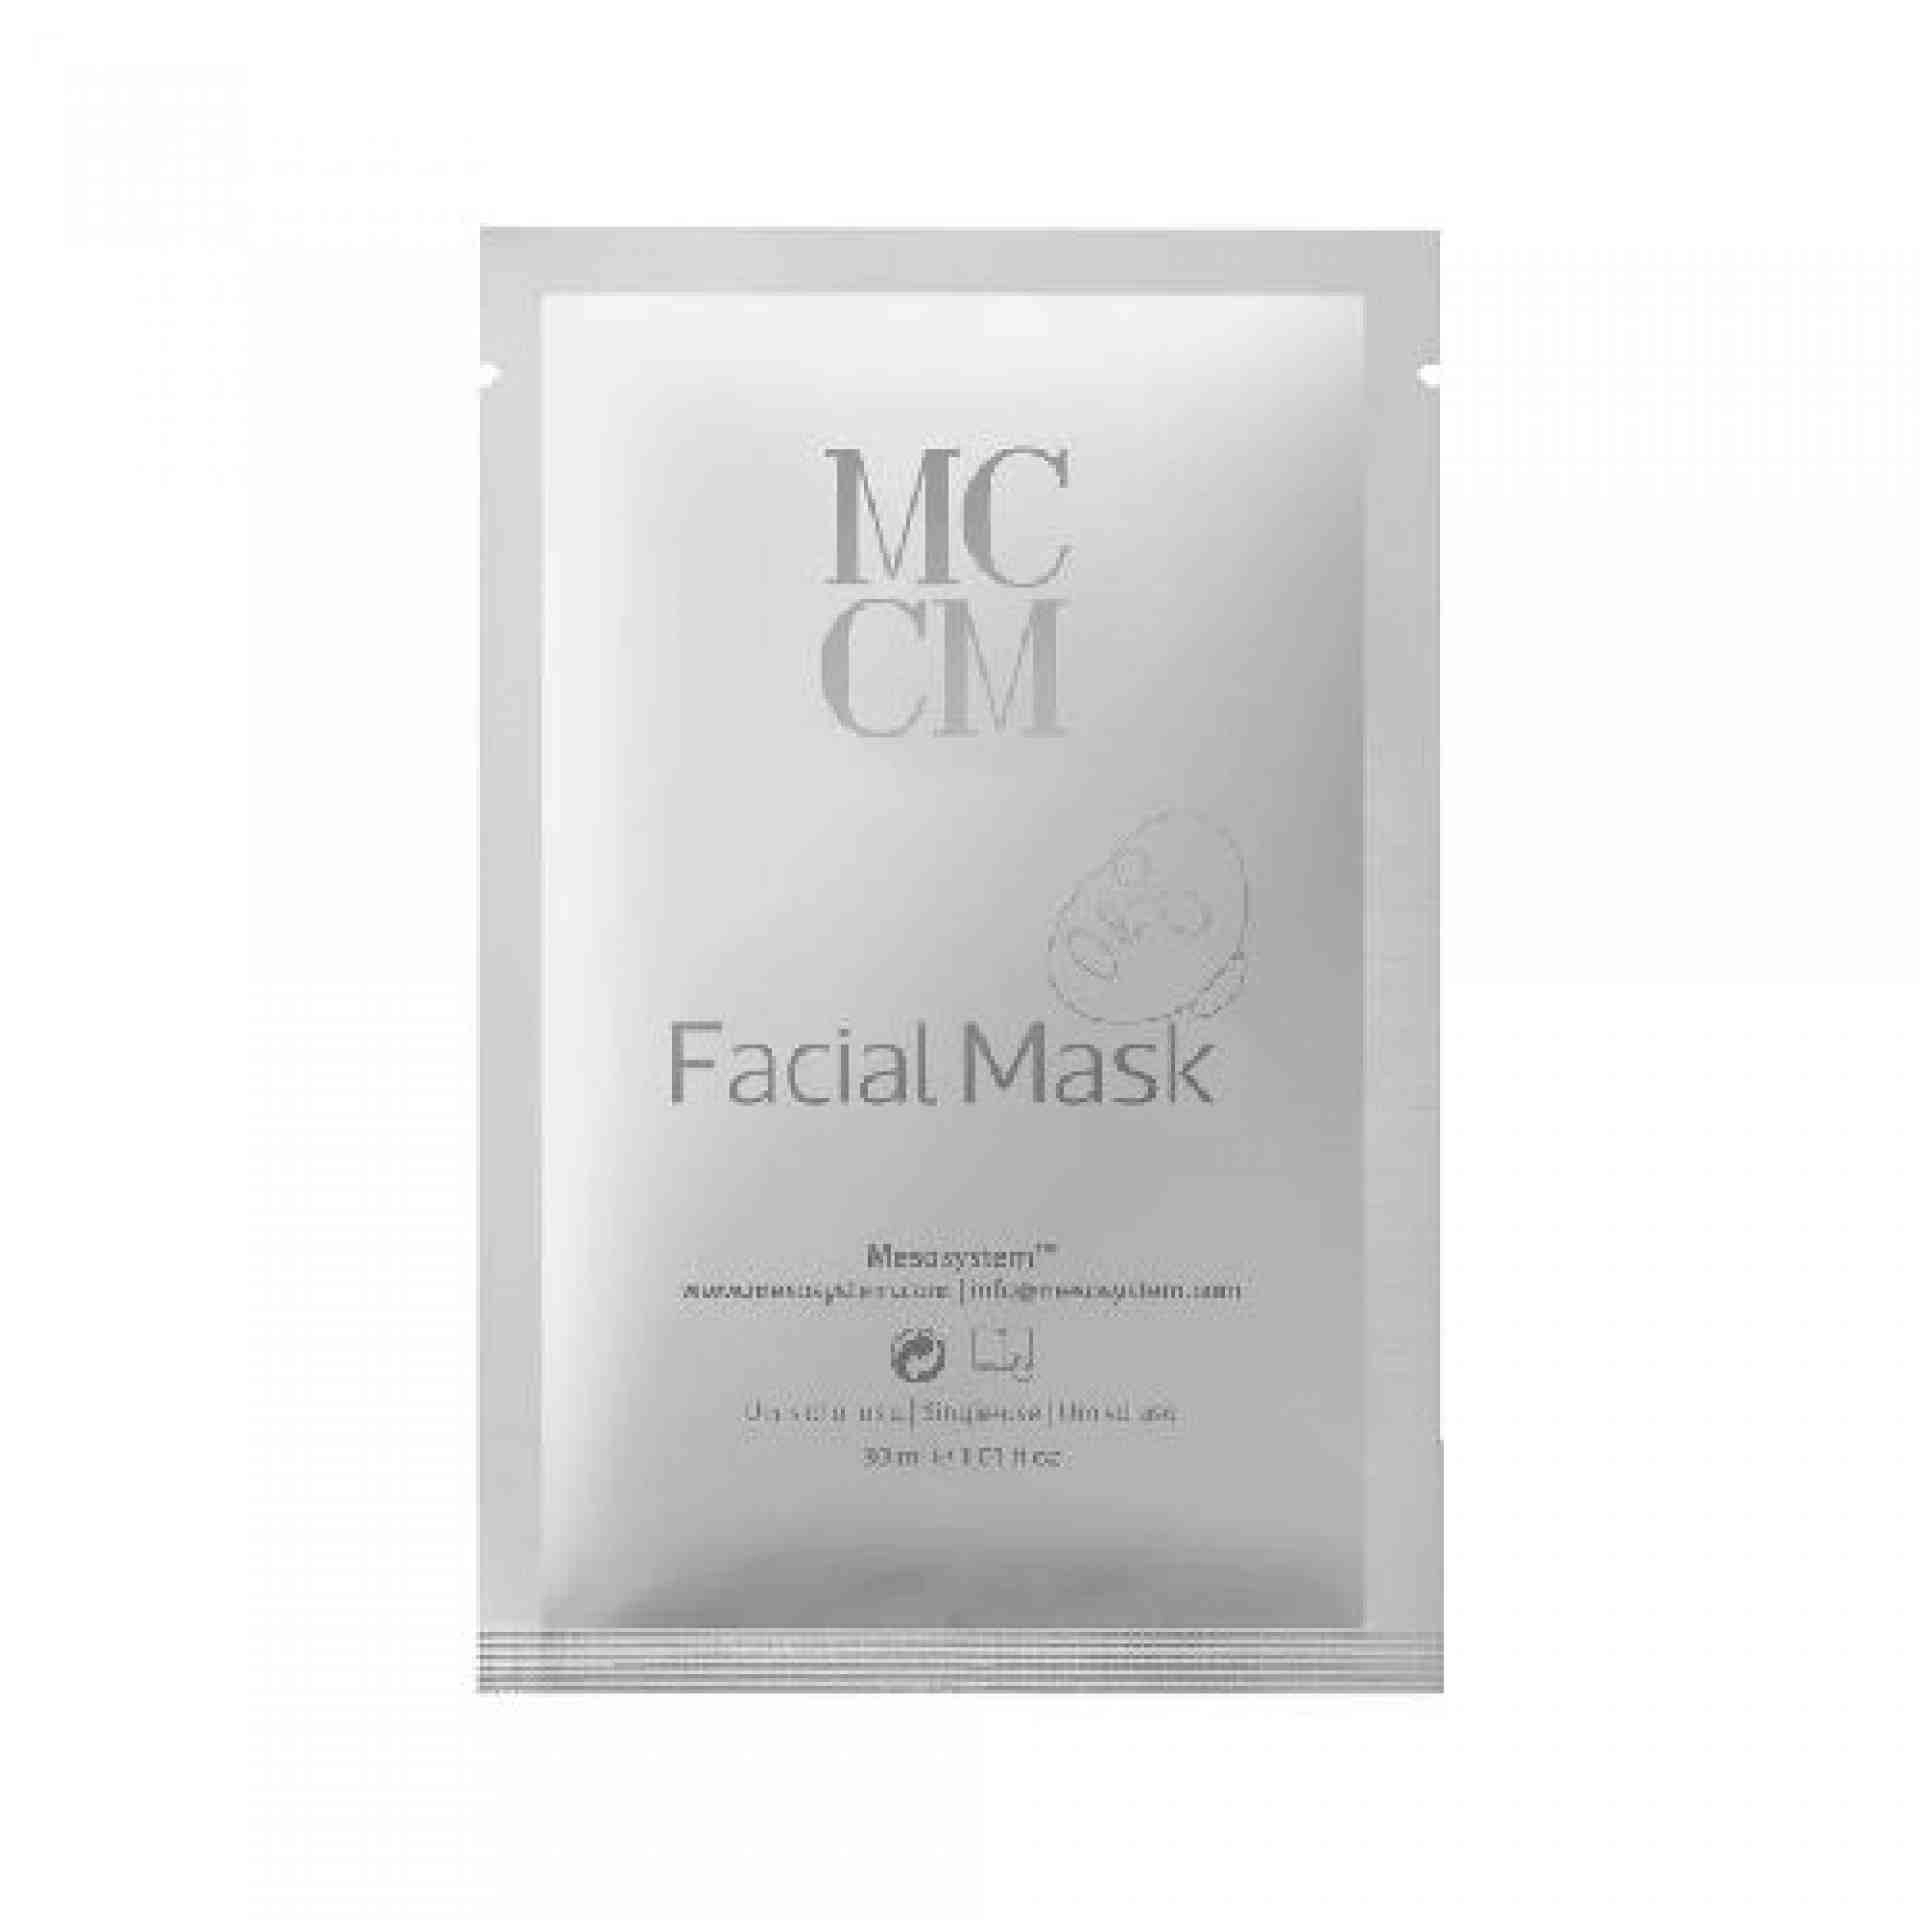 Facial mask | Mascarilla facial con ácido hialurónico 12uds - Hydrogel Line - MCCM ®